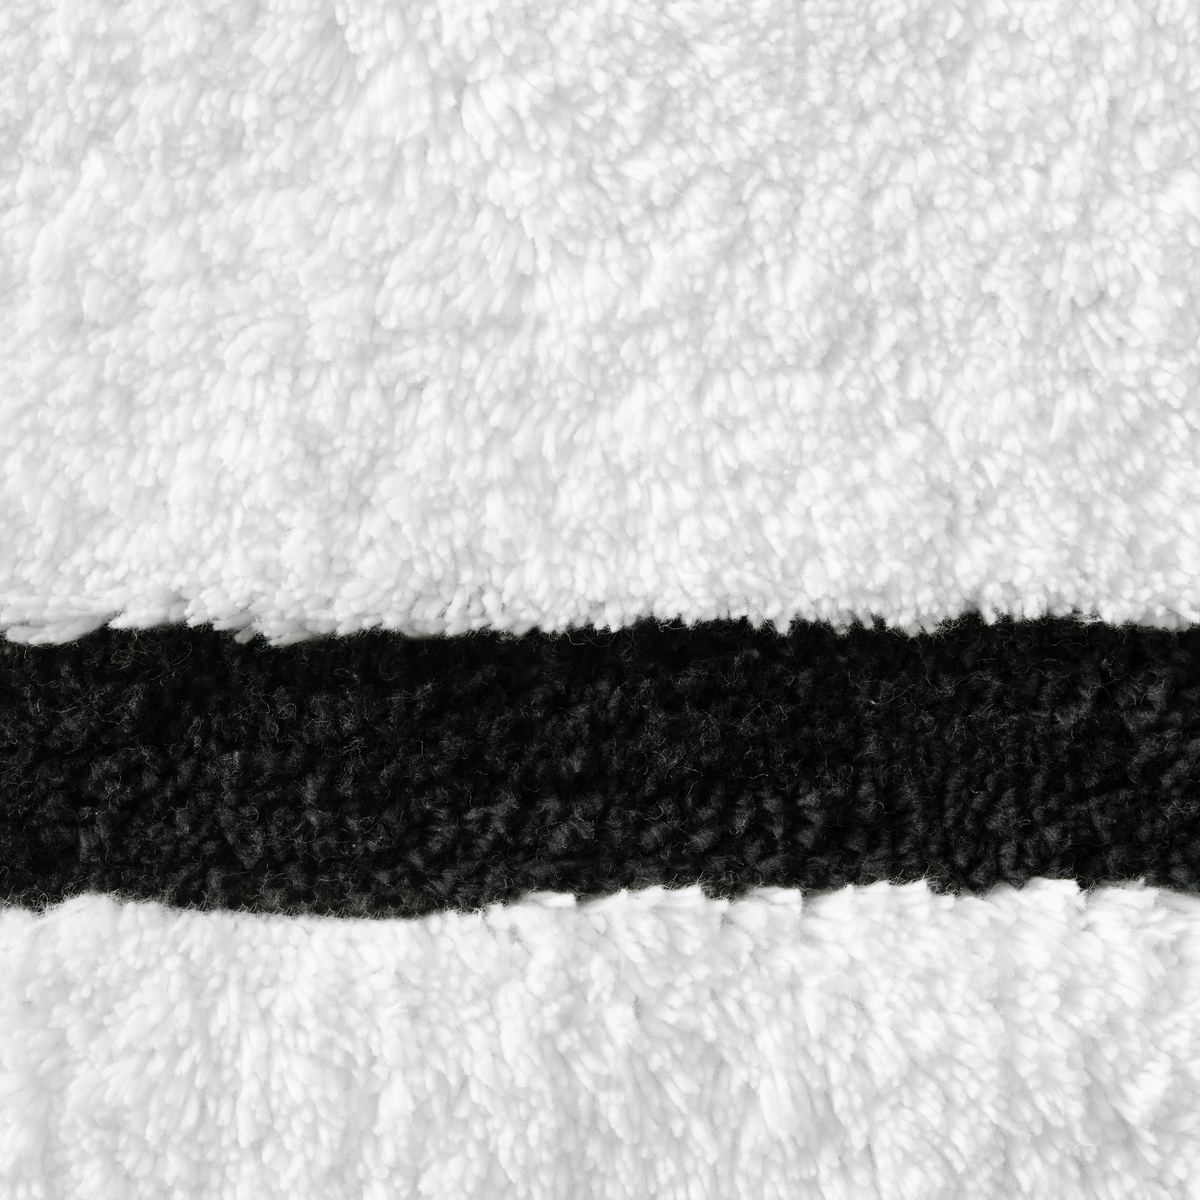 Swatch Sample of Sferra Lindo Bath Rugs in White Black Color